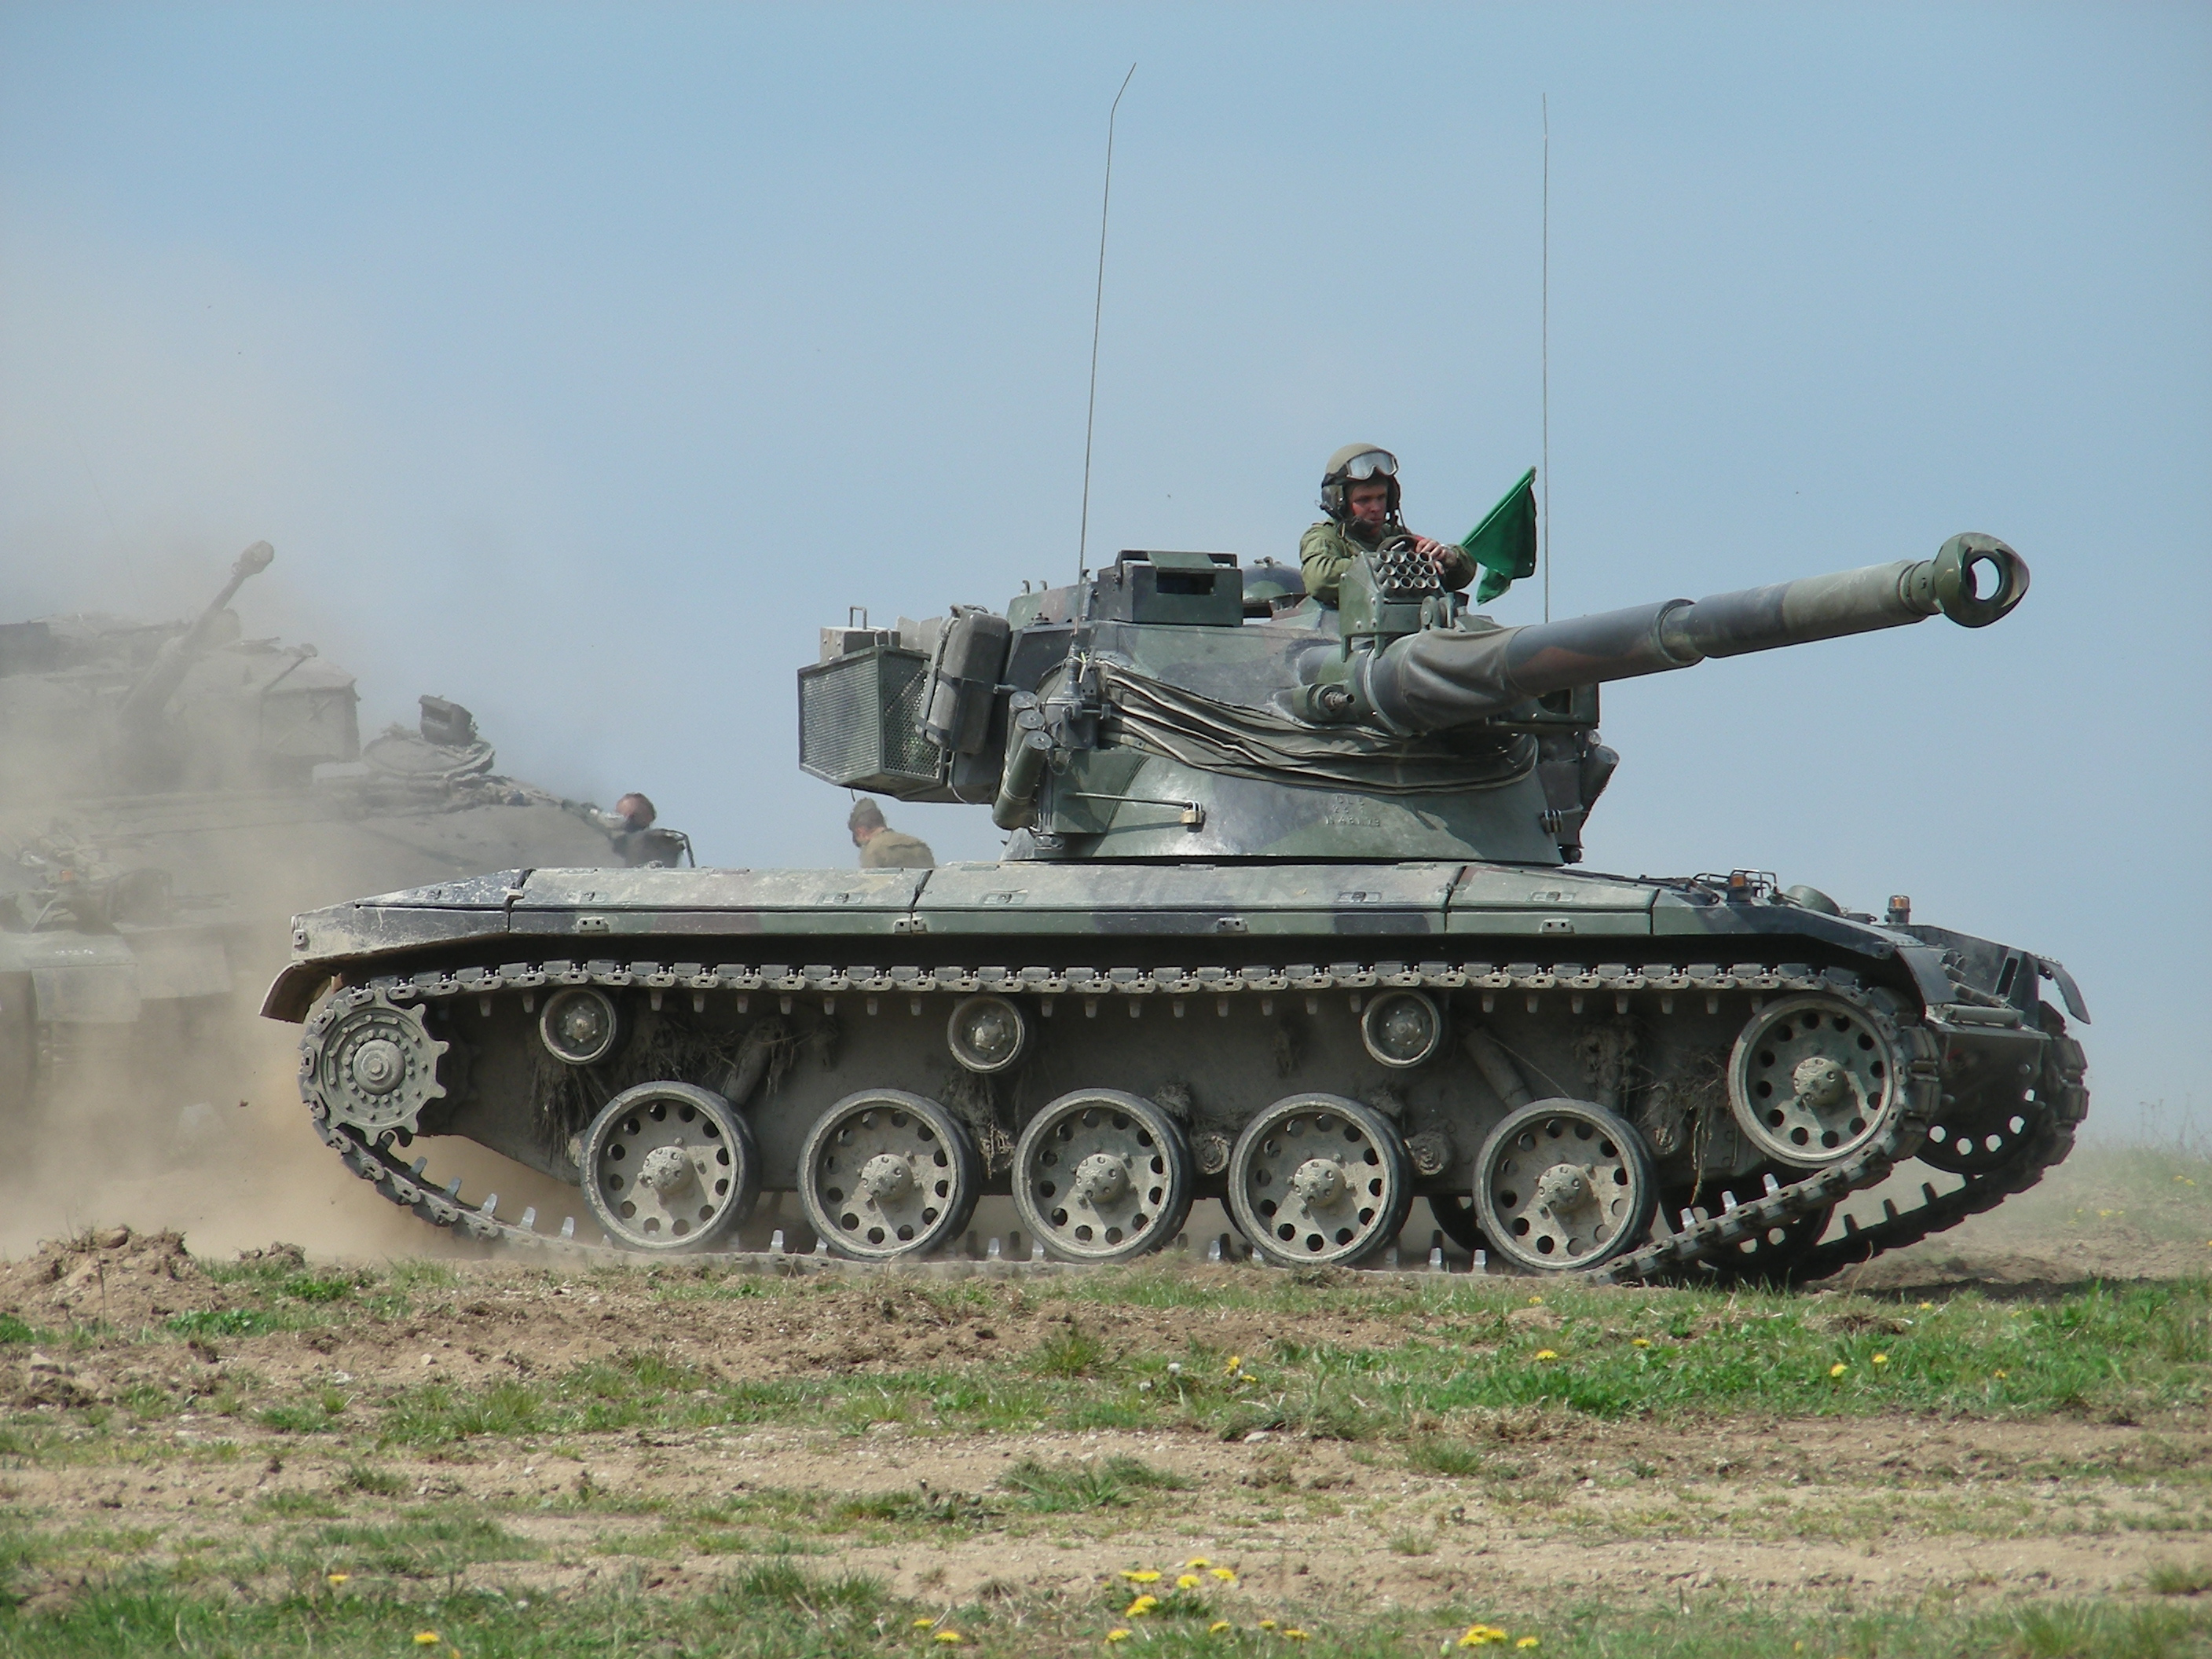 Tanks 13. Французский танк АМХ-13.